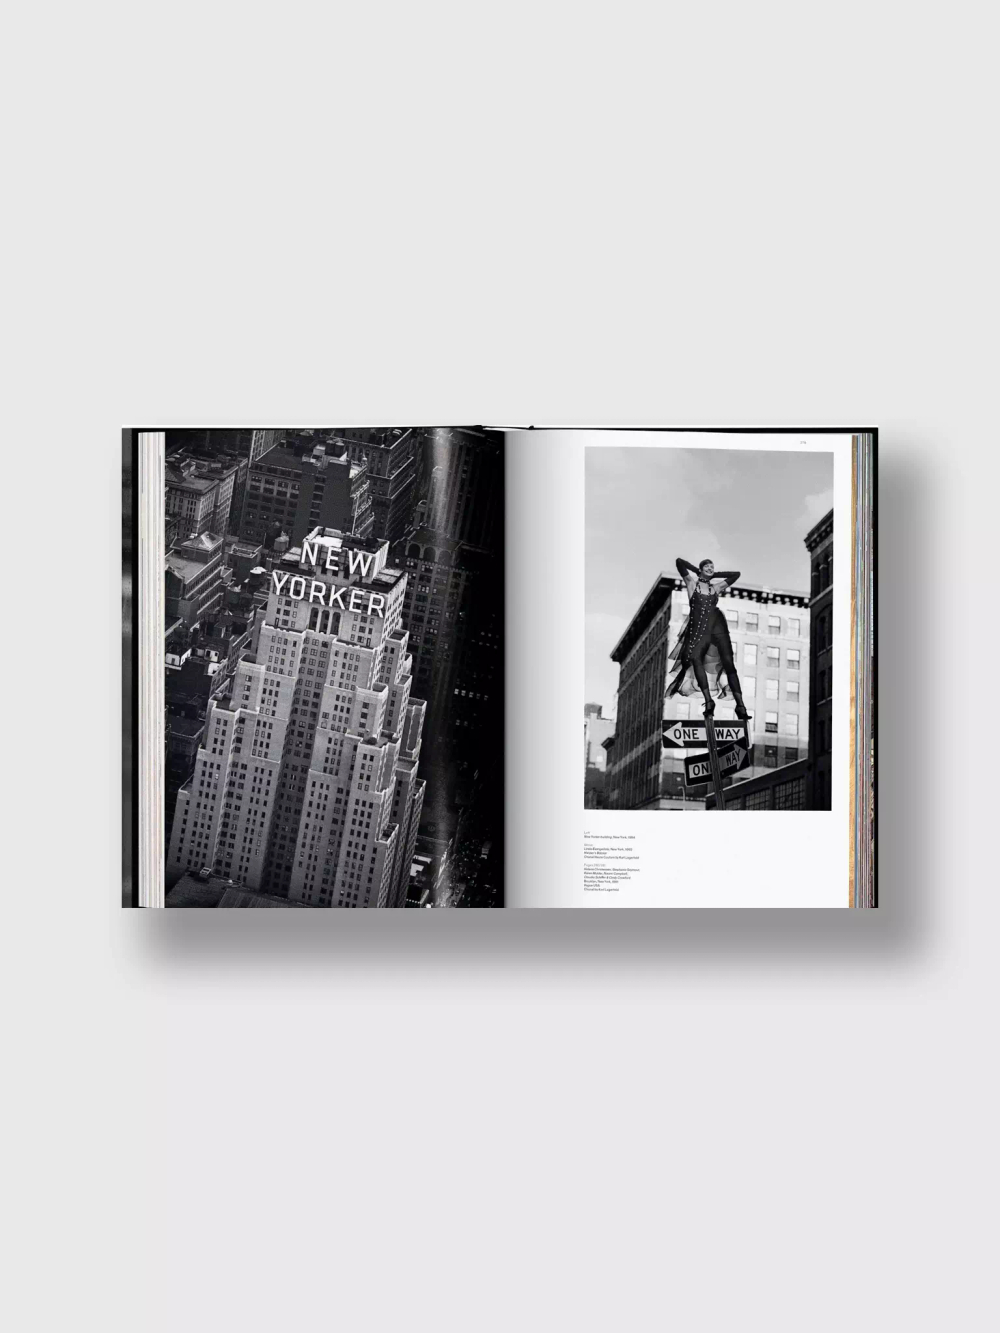 Книга Peter Lindbergh. On Fashion Photography (Taschen)